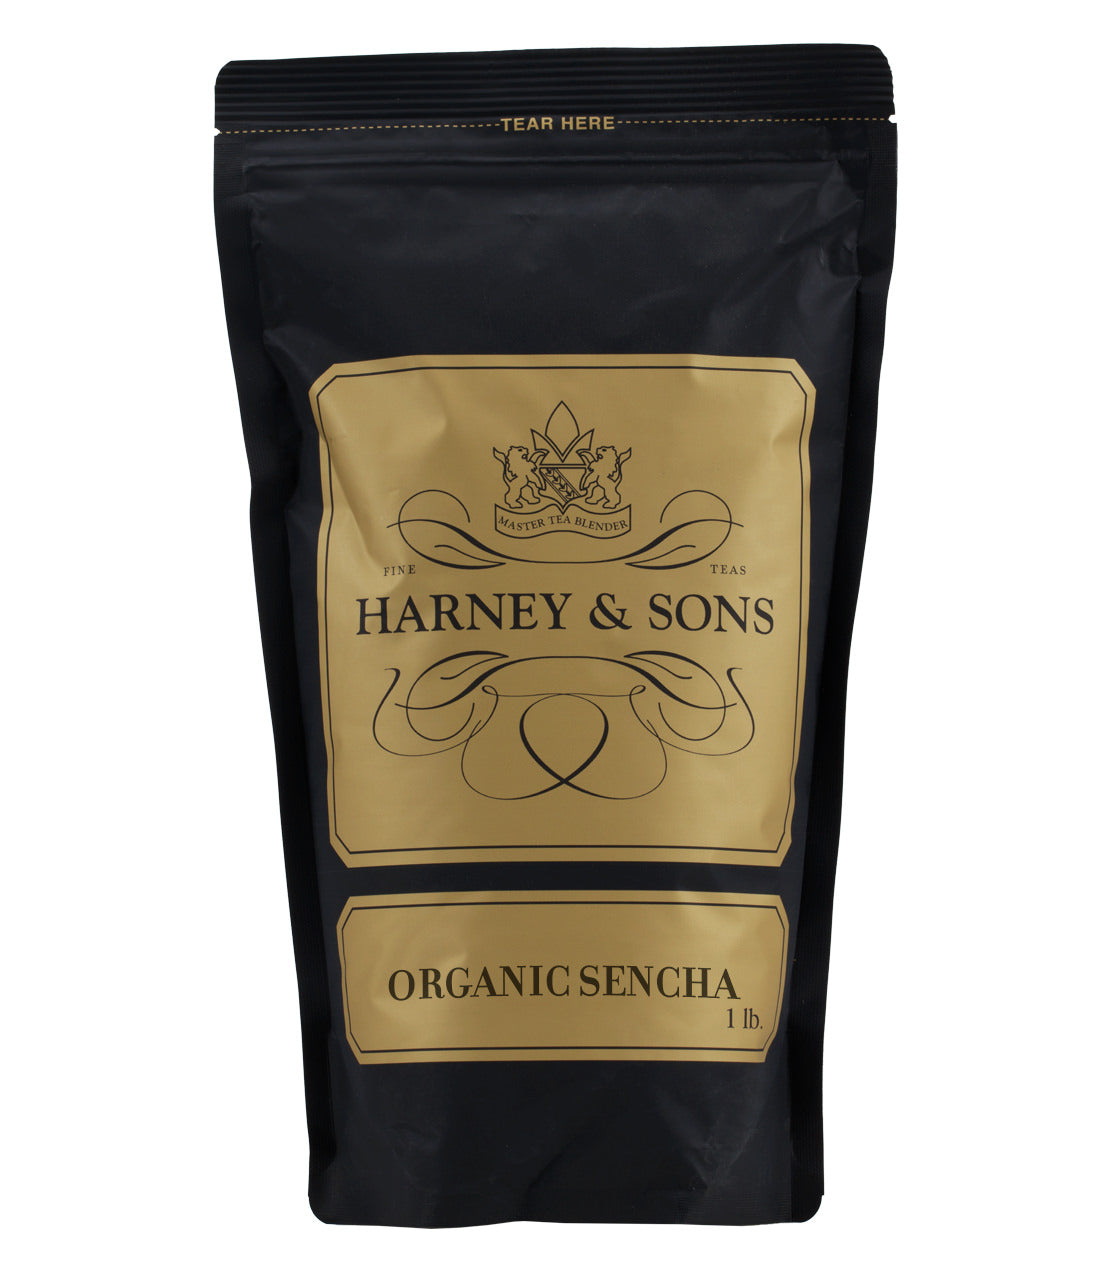 Organic Sencha - Loose 1 lb. Bag - Harney & Sons Fine Teas